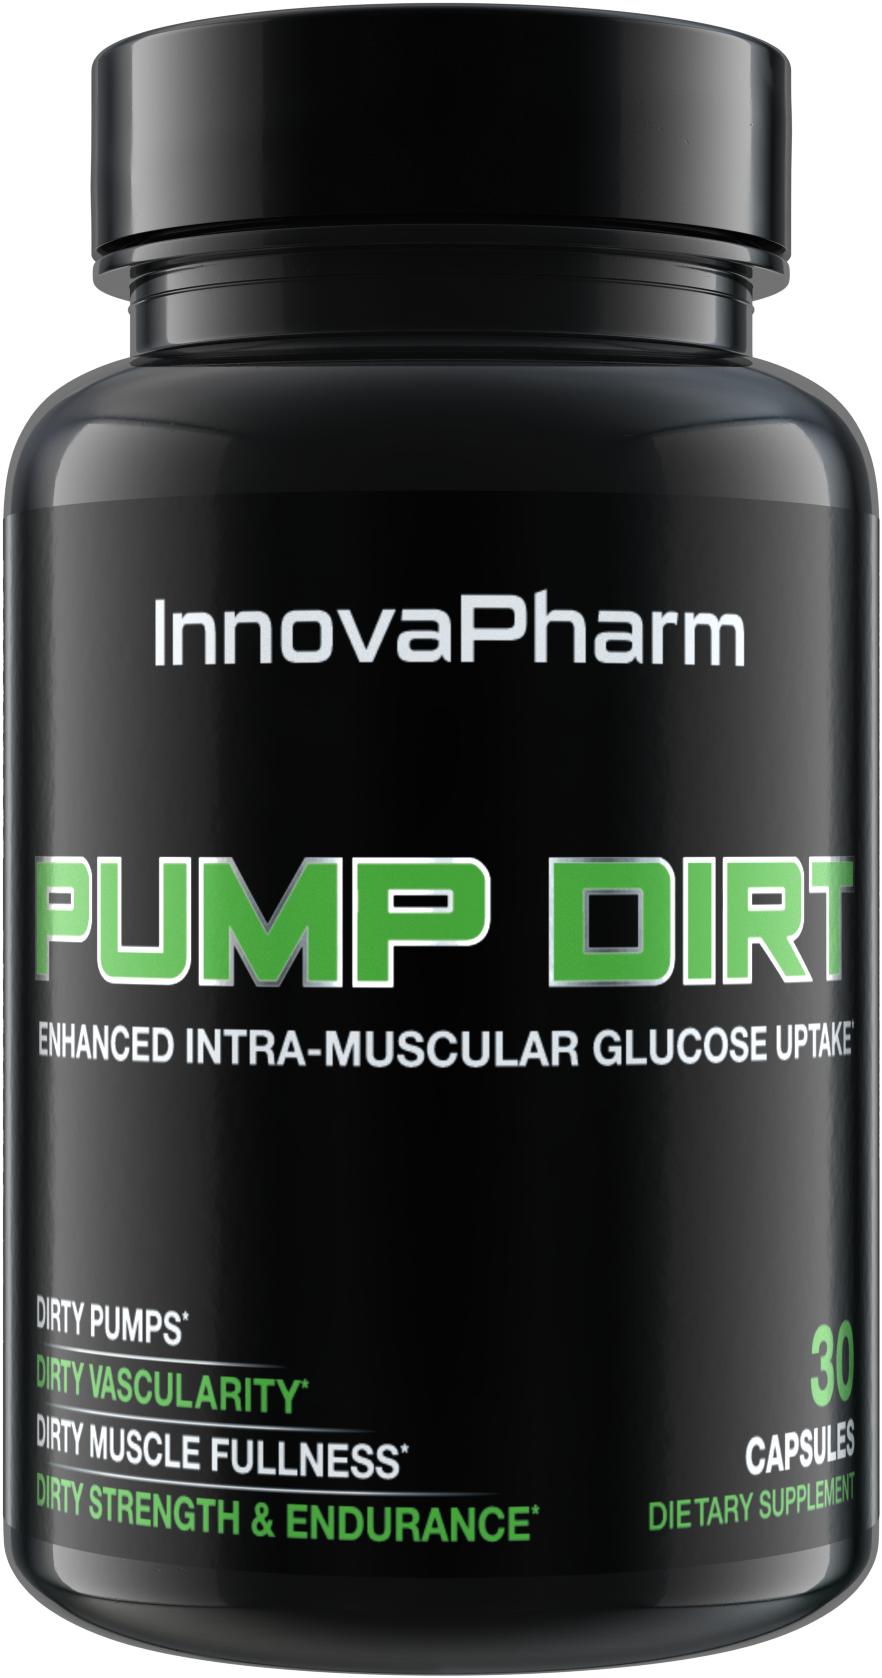 Pump Dirt Caps - Bodybuilding Supplement Clipart (2000x2000), Png Download